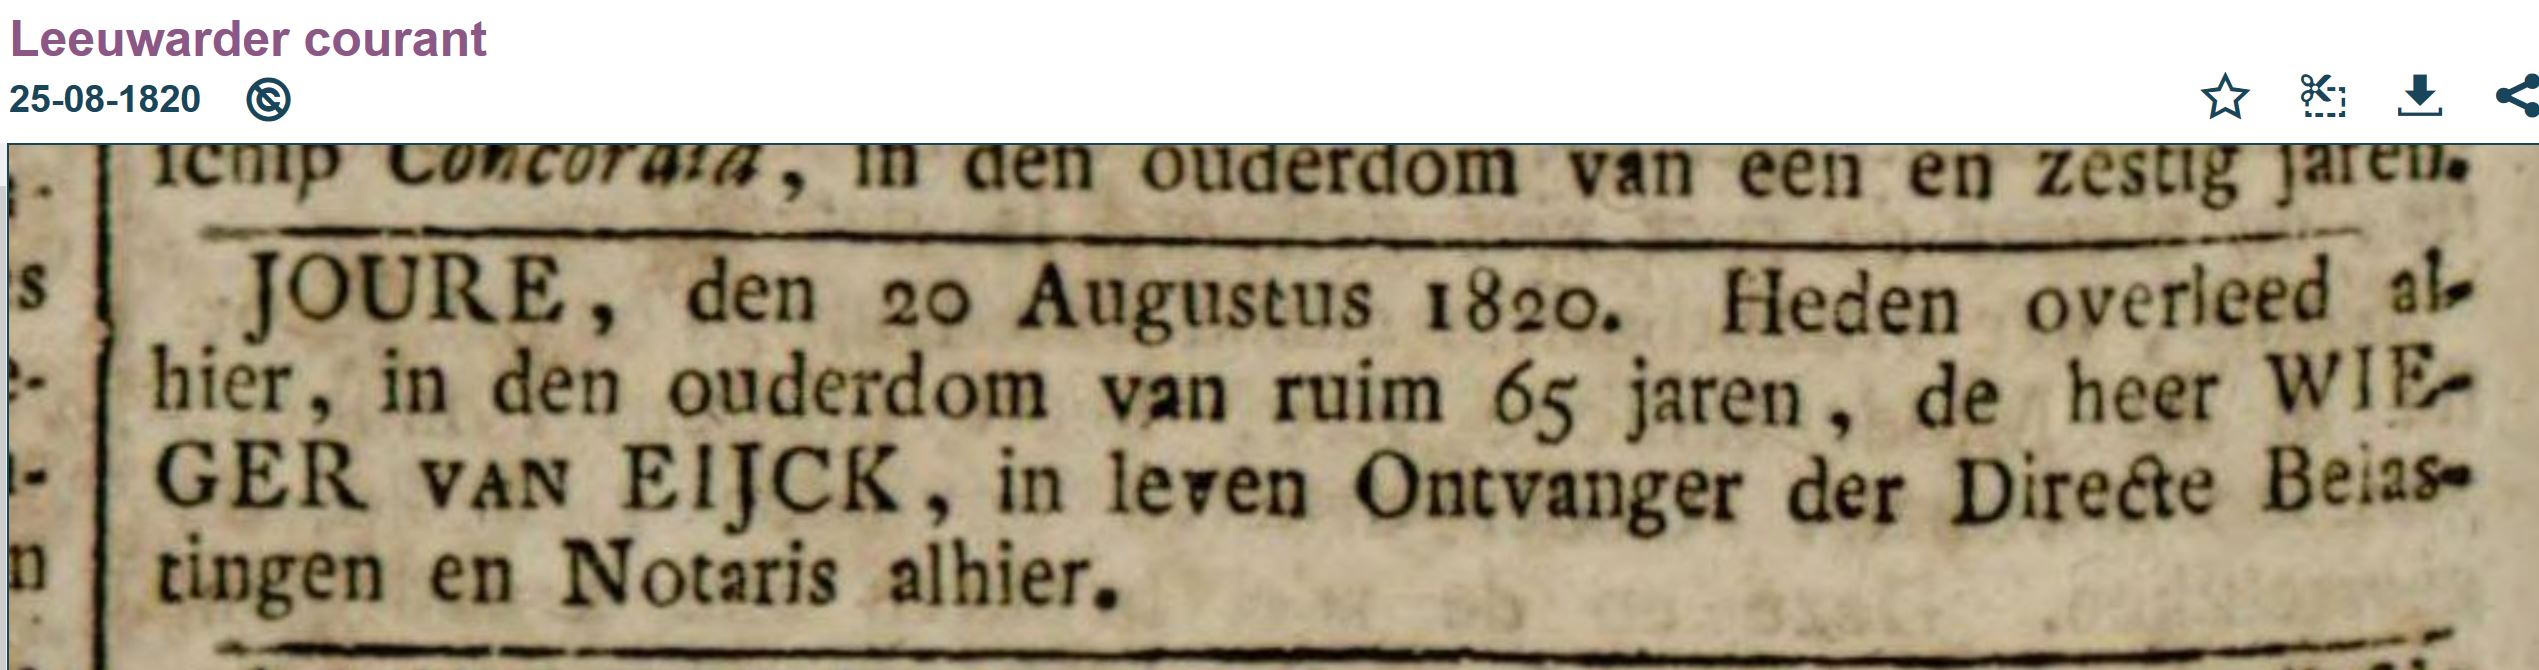 1820overlijdenwiegervaneijck.jpg